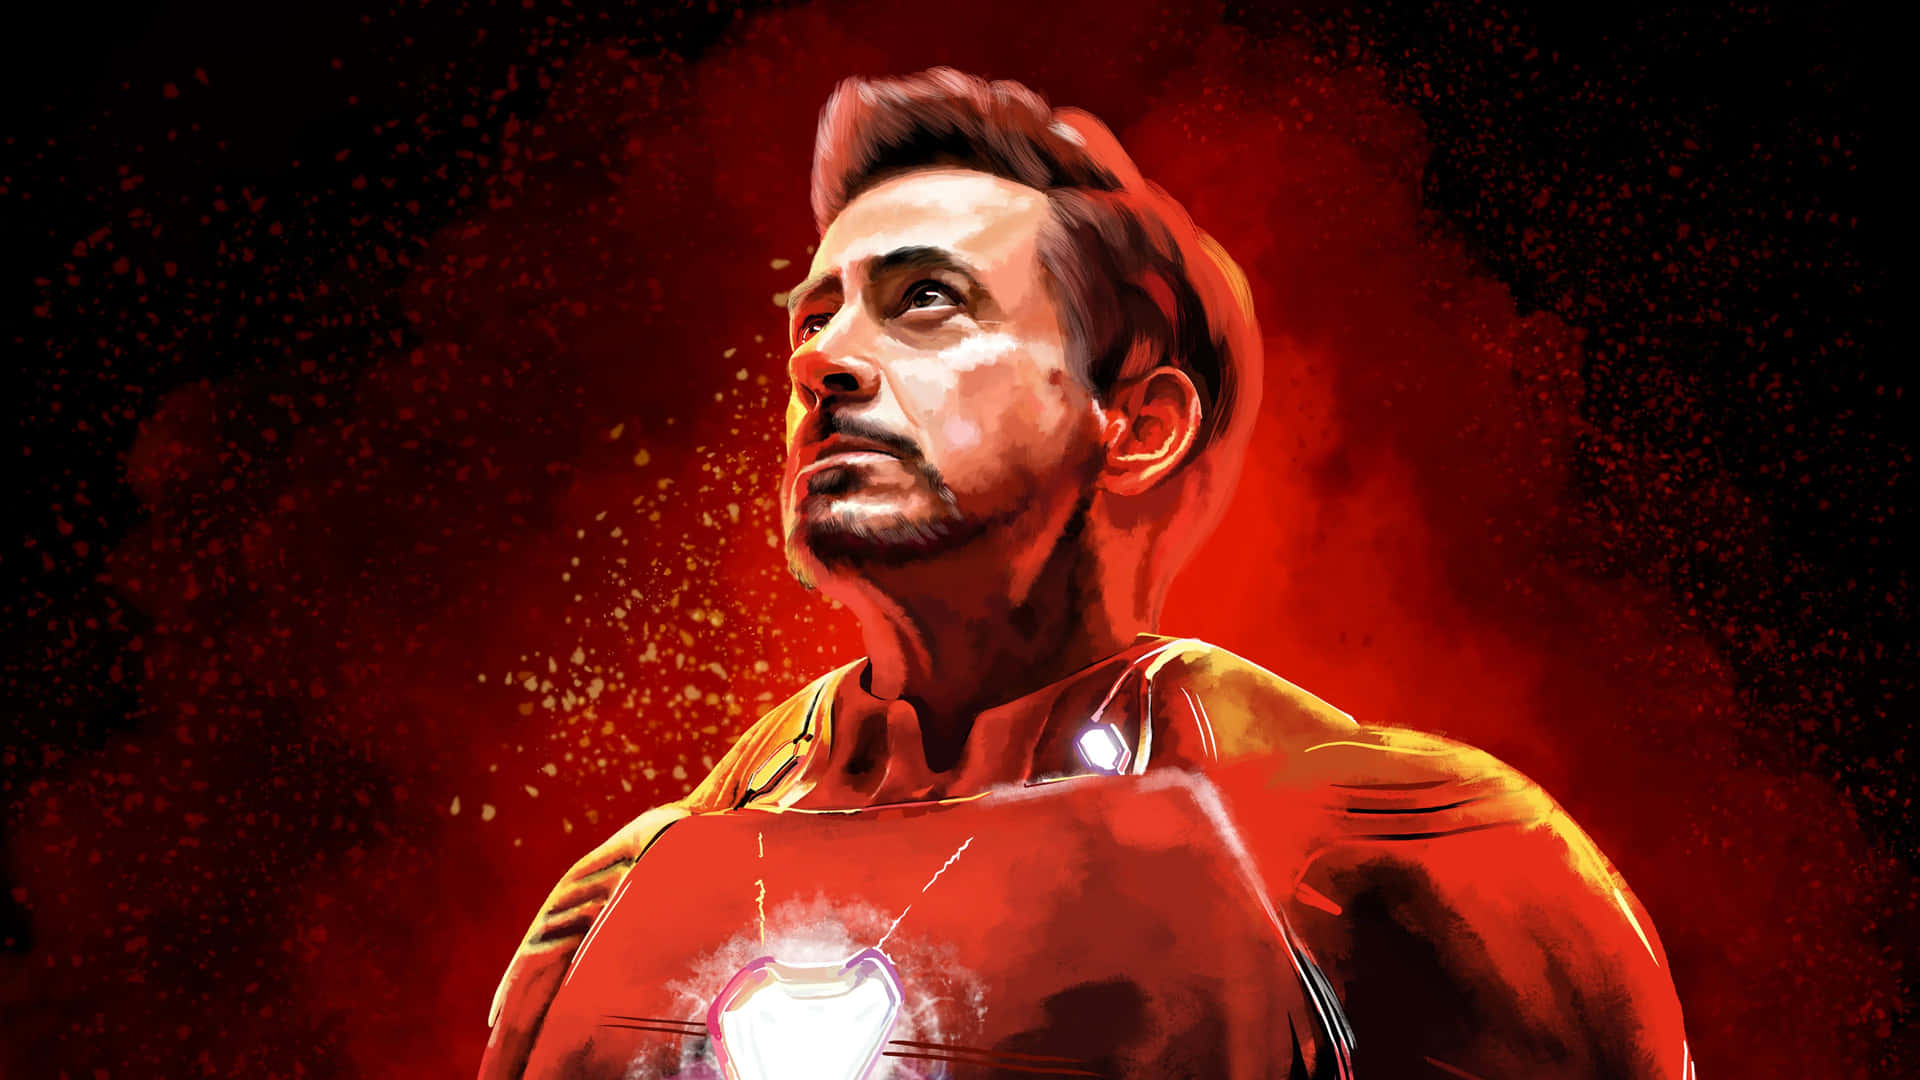 Tony Stark Iron Man Red Backdrop Background